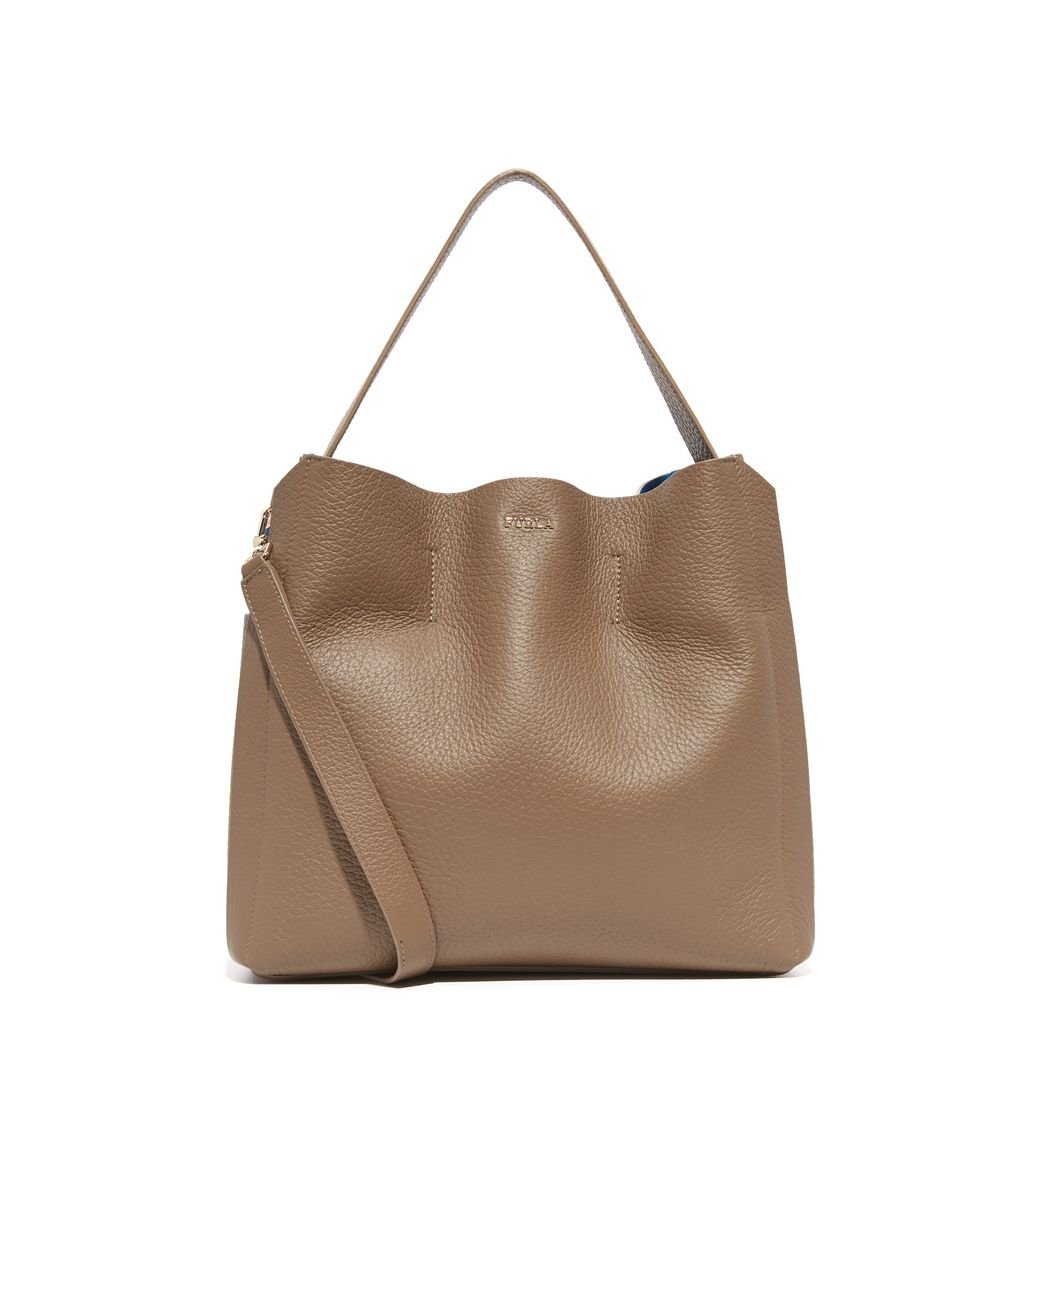 Furla Capriccio Medium Hobo Bag in Brown | Lyst Canada